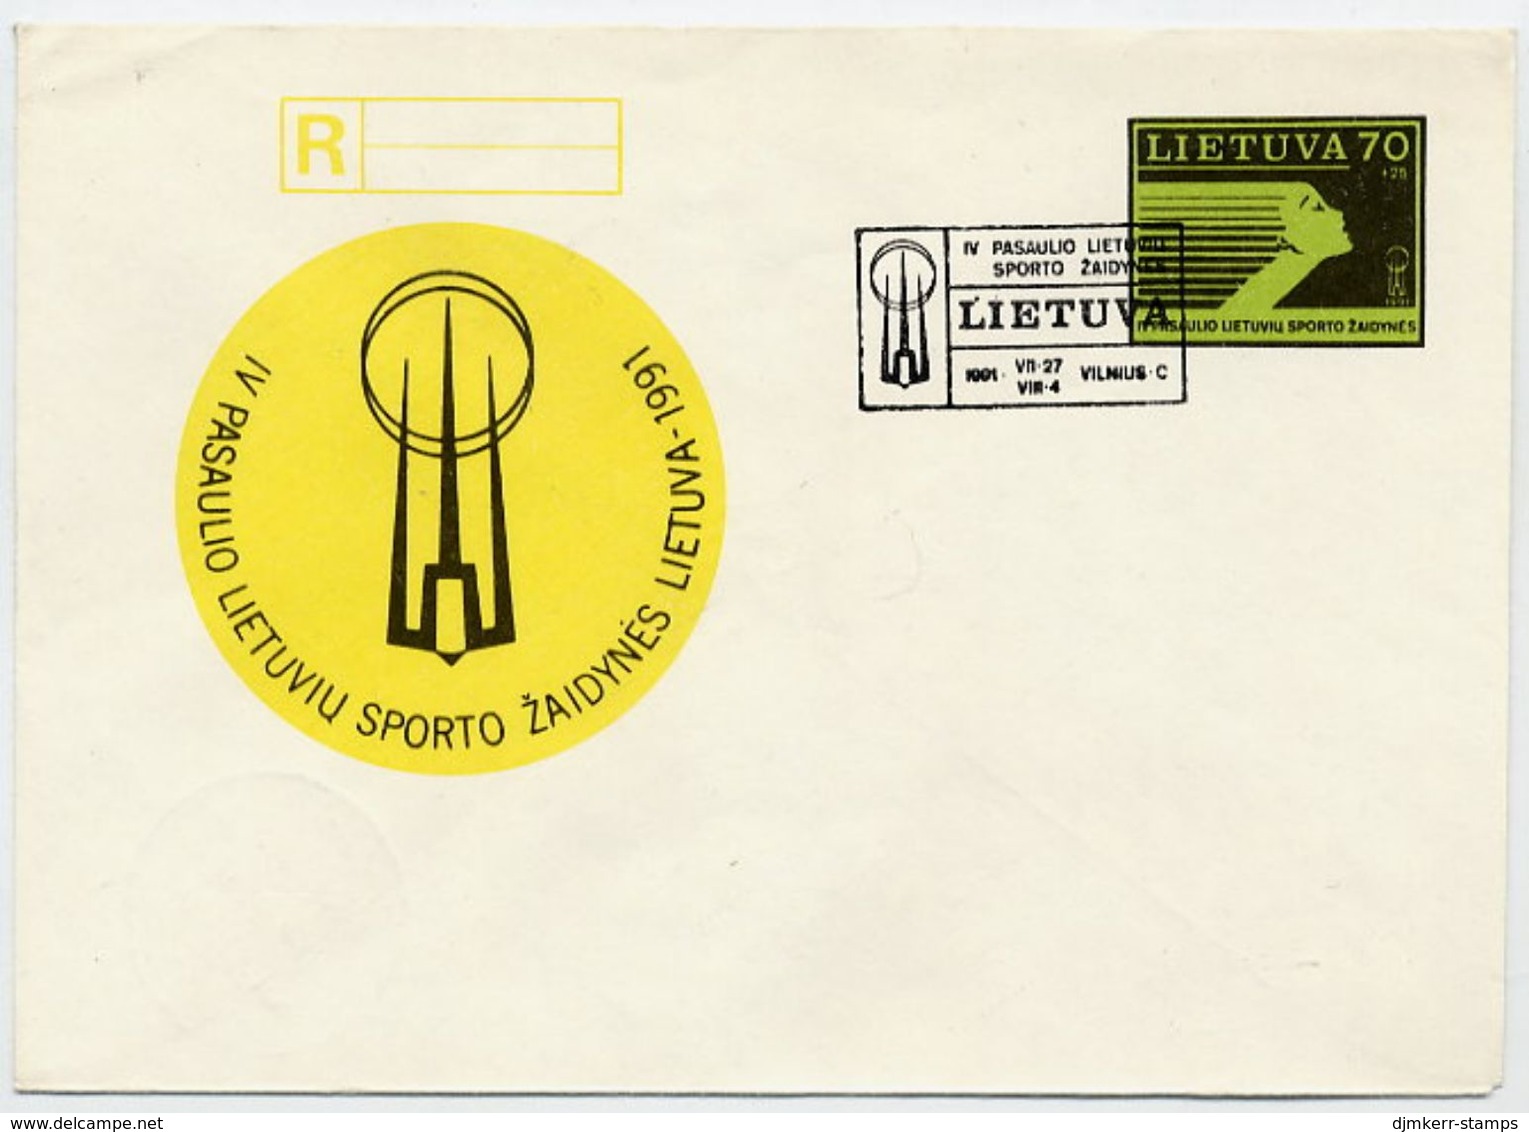 LITHUANIA 1991 Lithuanian World Games Registration Stationery Envelope, Cancelled.  Michel EU2 - Lituania